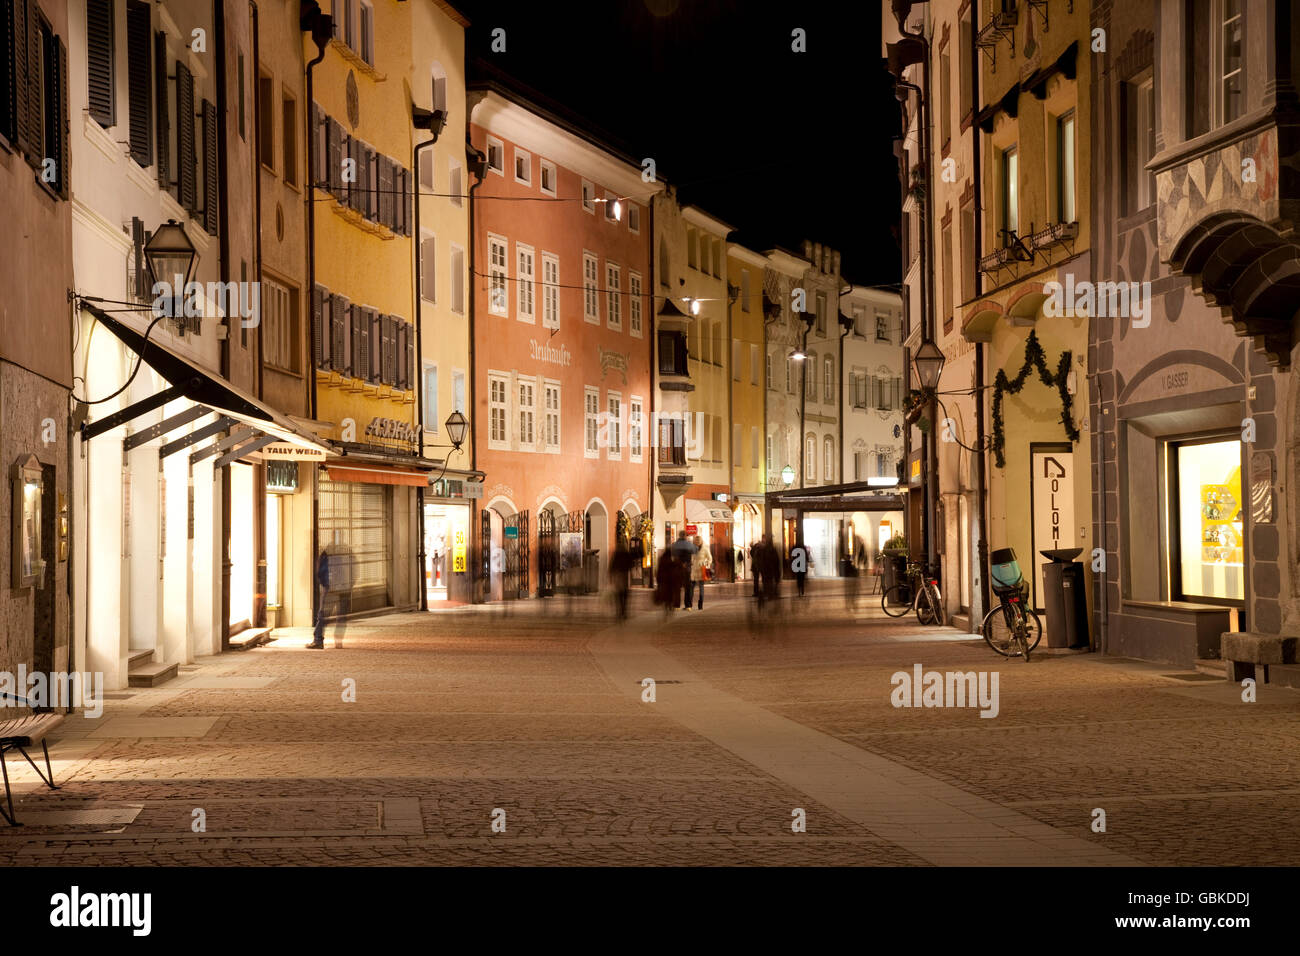 City street at night, Bruneck, Pustertal valley, Val Pusteria, Alto Adige, Italy, Europe Stock Photo